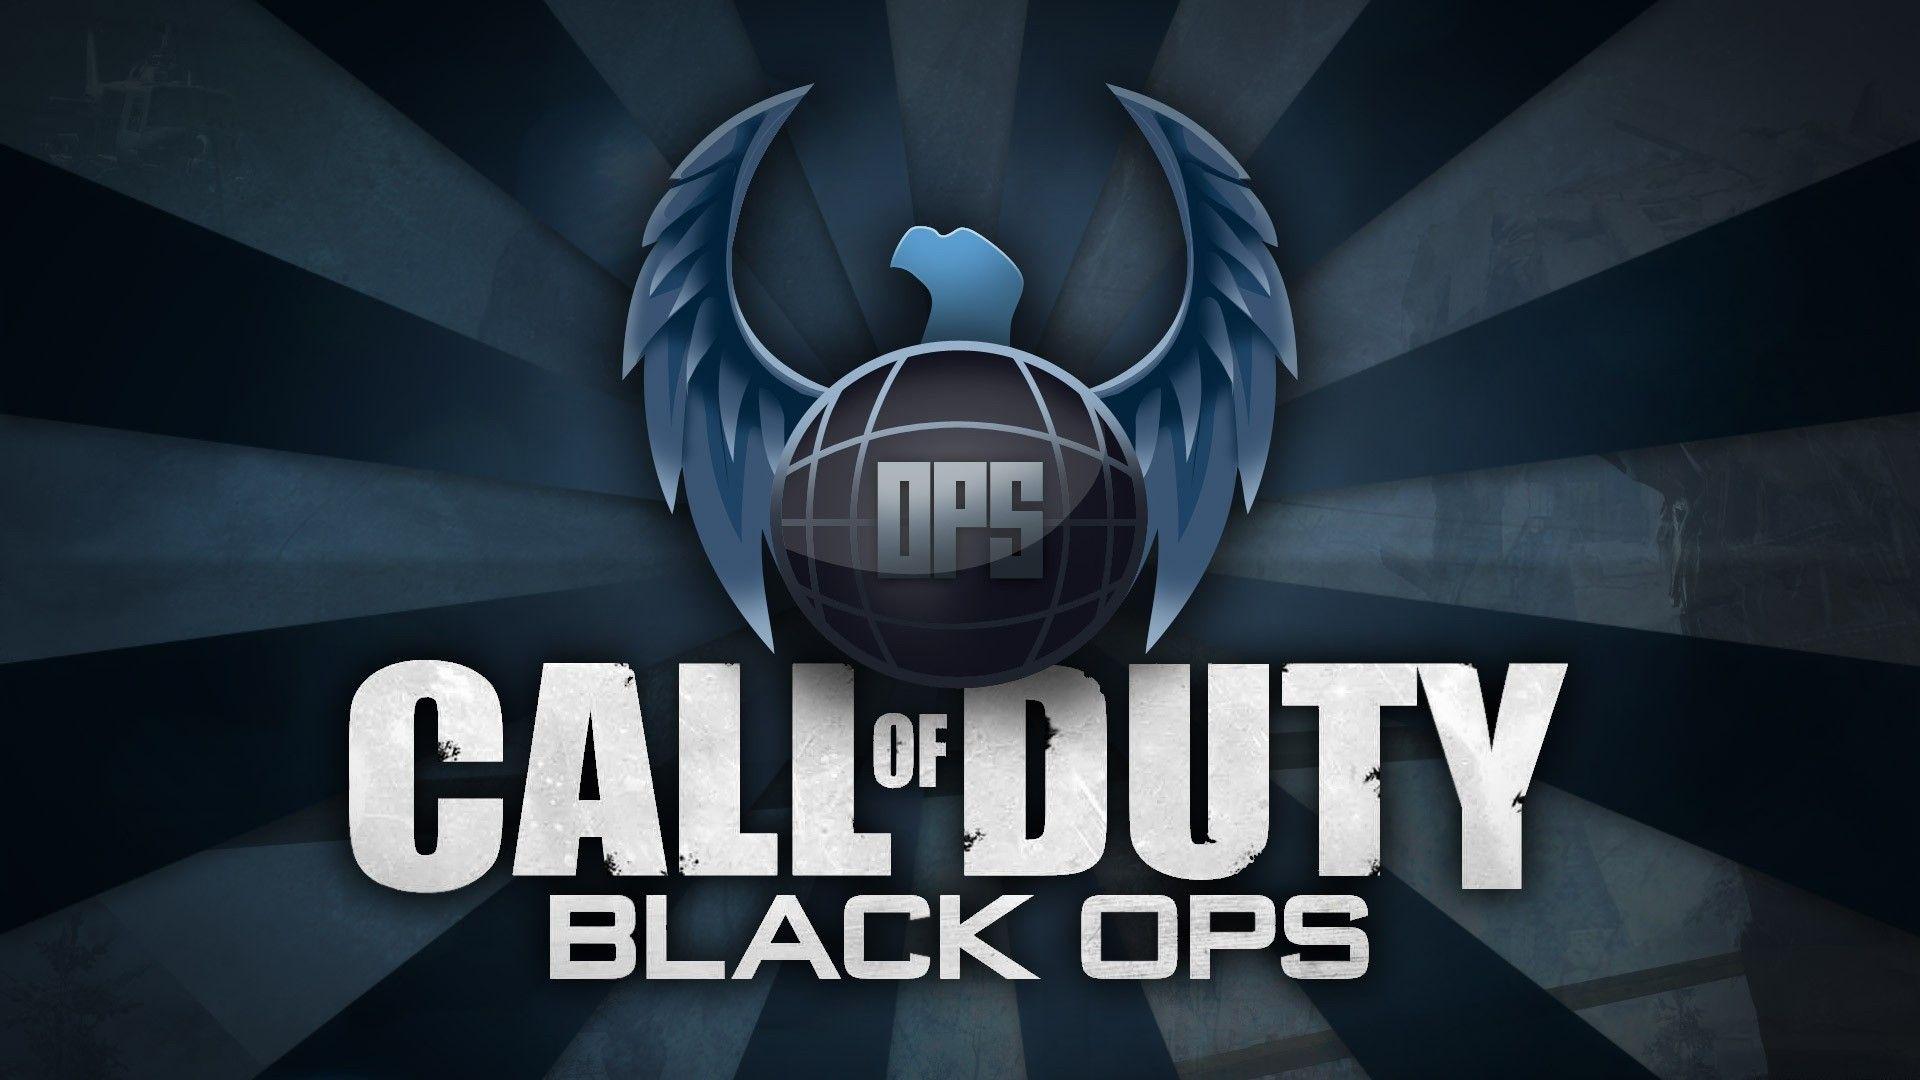 BO1 Logo - Call of Duty: Black Ops Details - LaunchBox Games Database